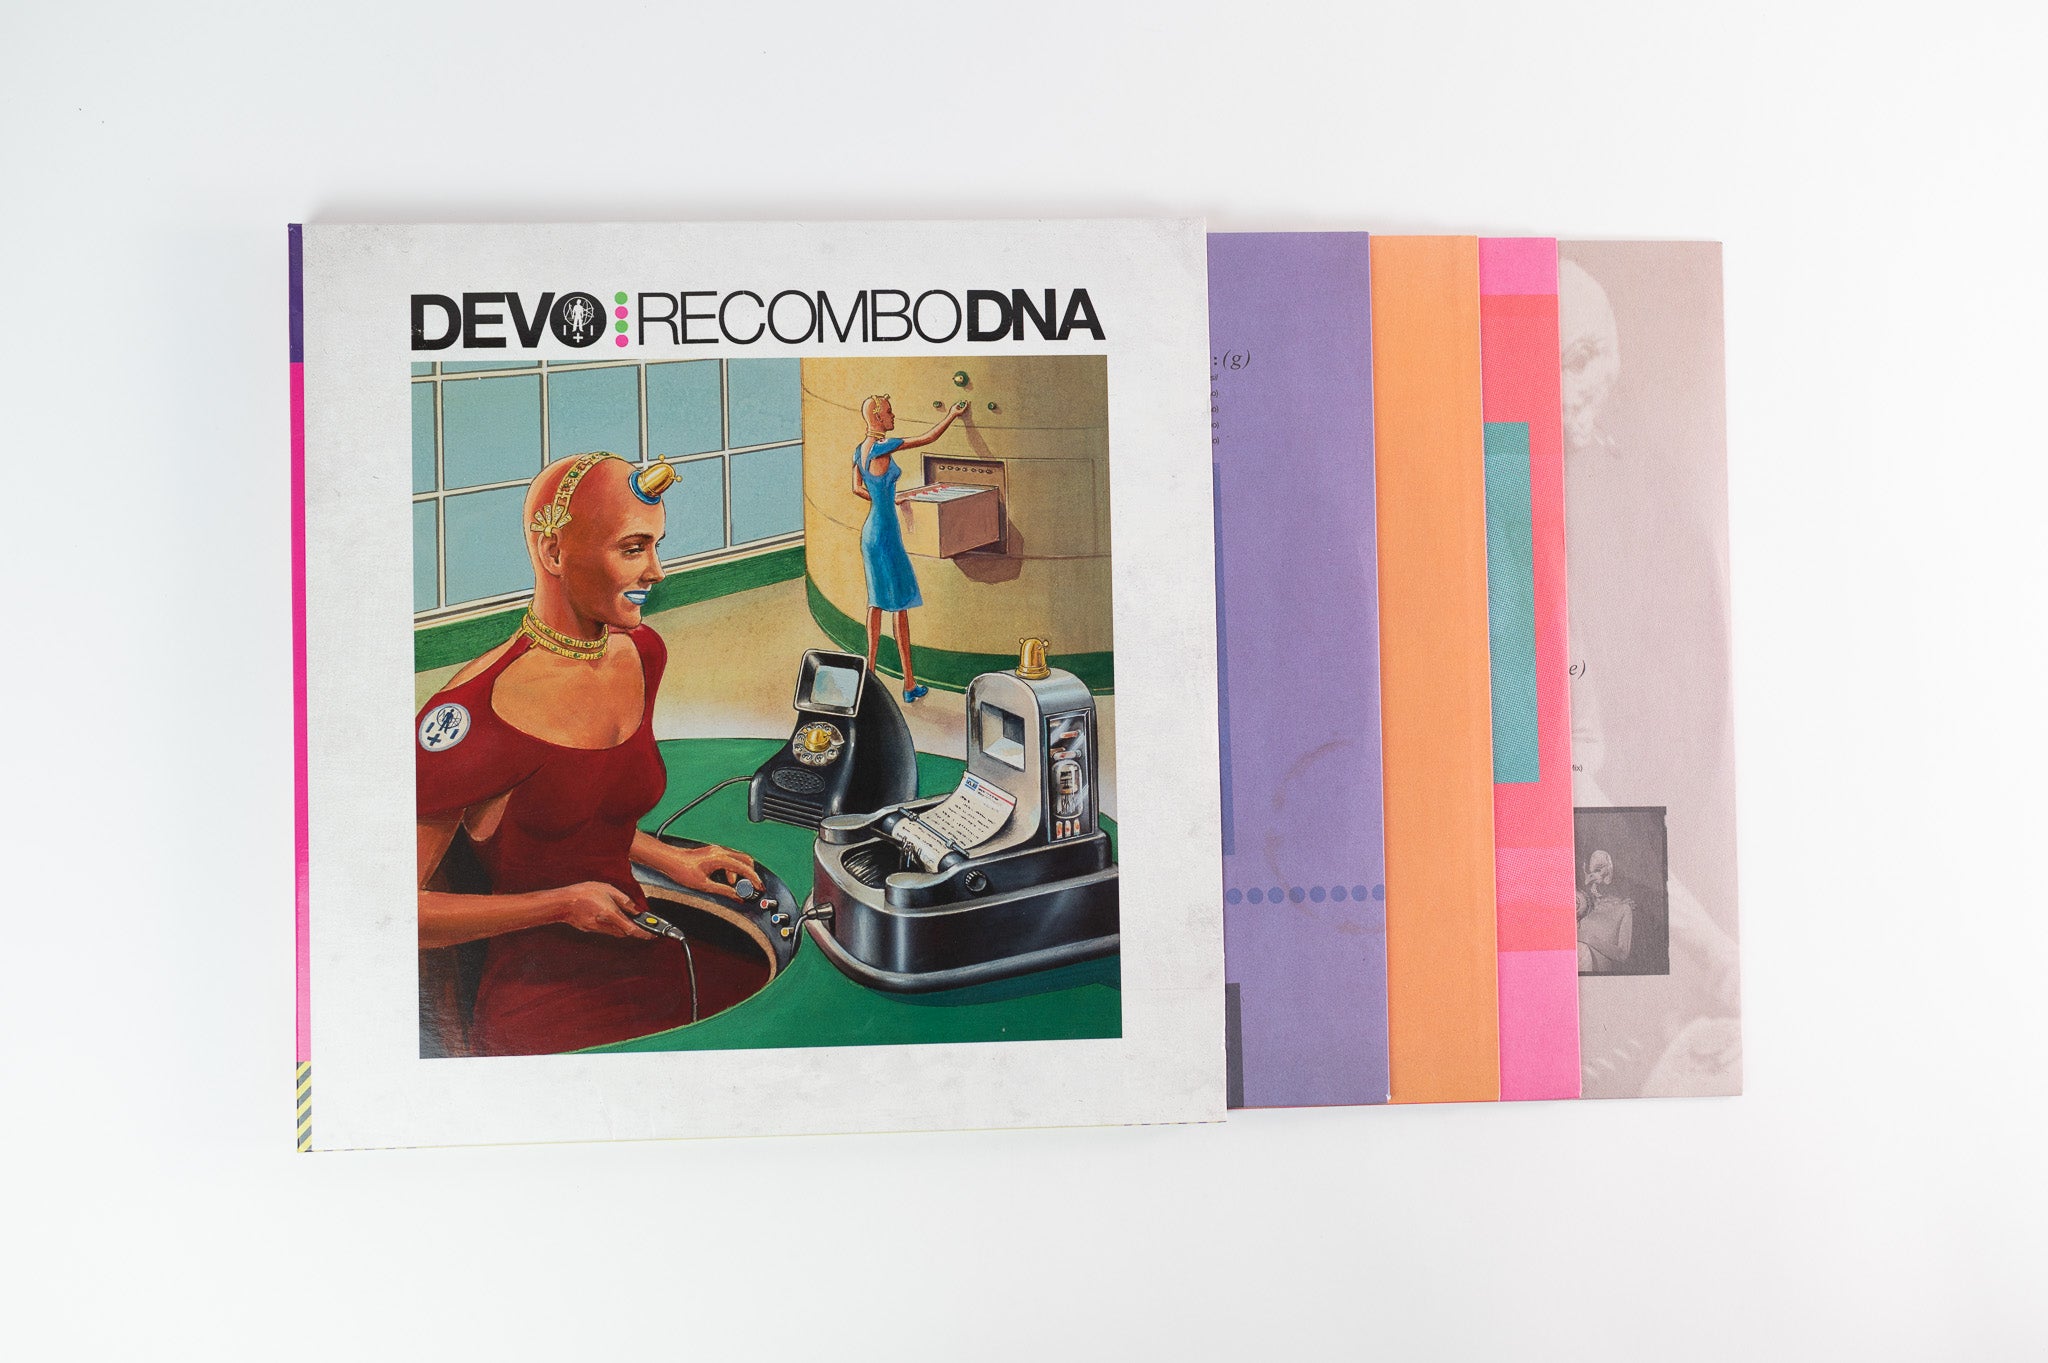 Devo - Recombo DNA on Futurismo Ltd Emergency Codes Green / Blue / Red / Orange Vinyl